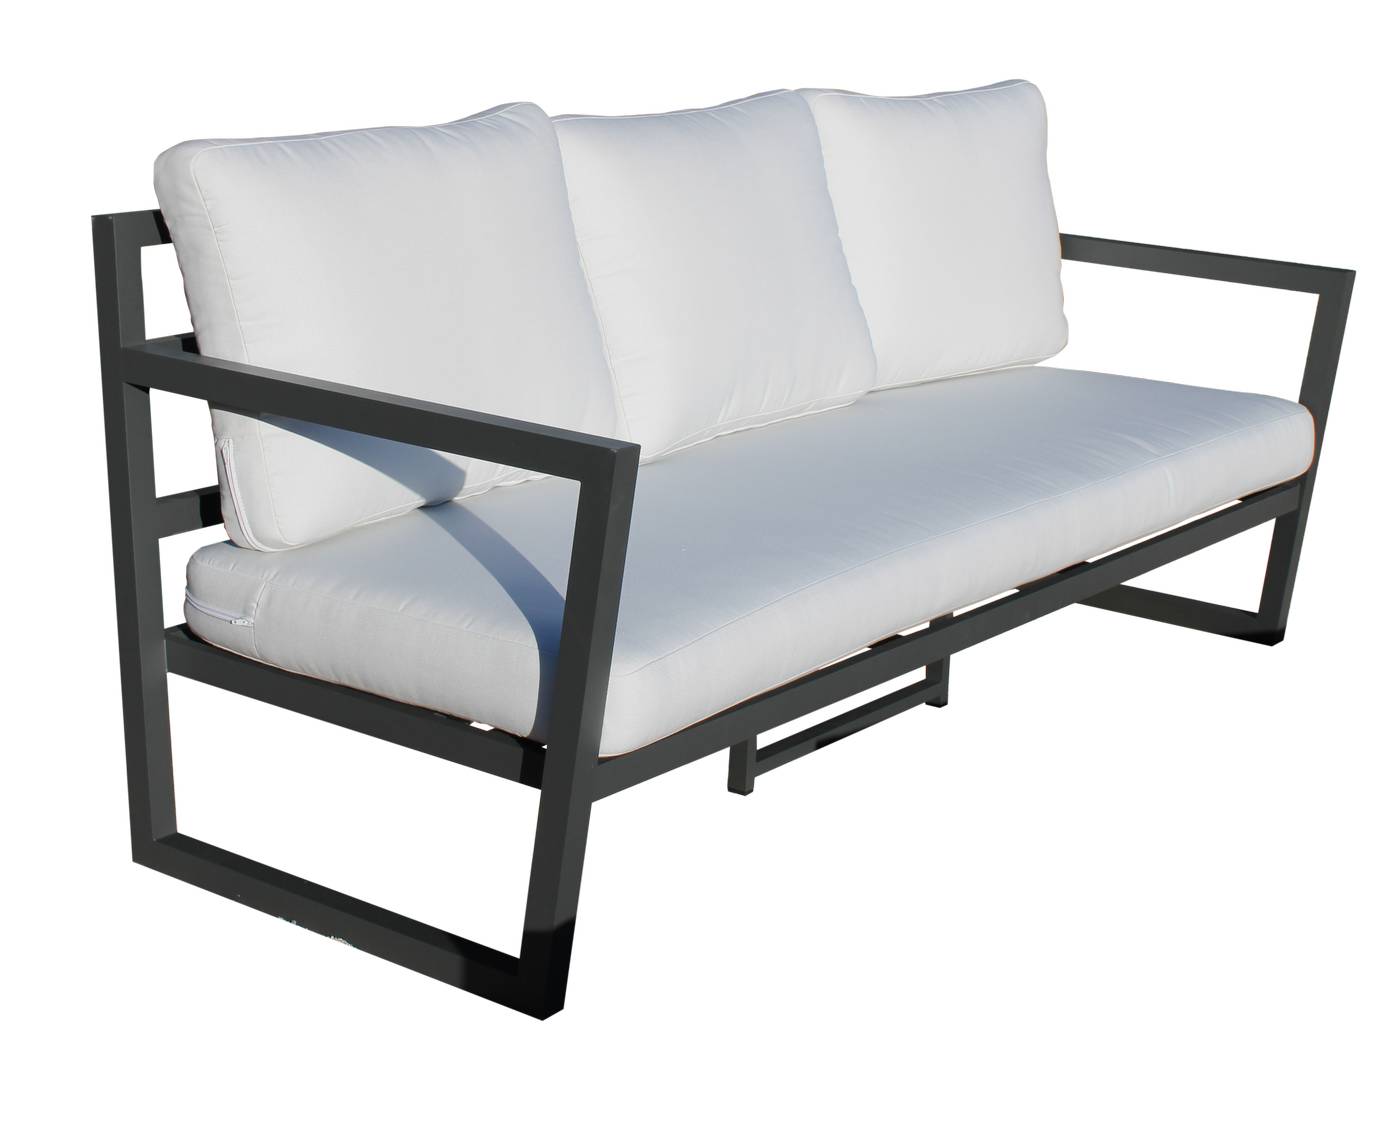 Set Aluminio Piona-8 - Conjunto de aluminio para exterior: sofá 3 plazas + 2 sillones + mesa de centro. Disponible en cinco colores diferentes.